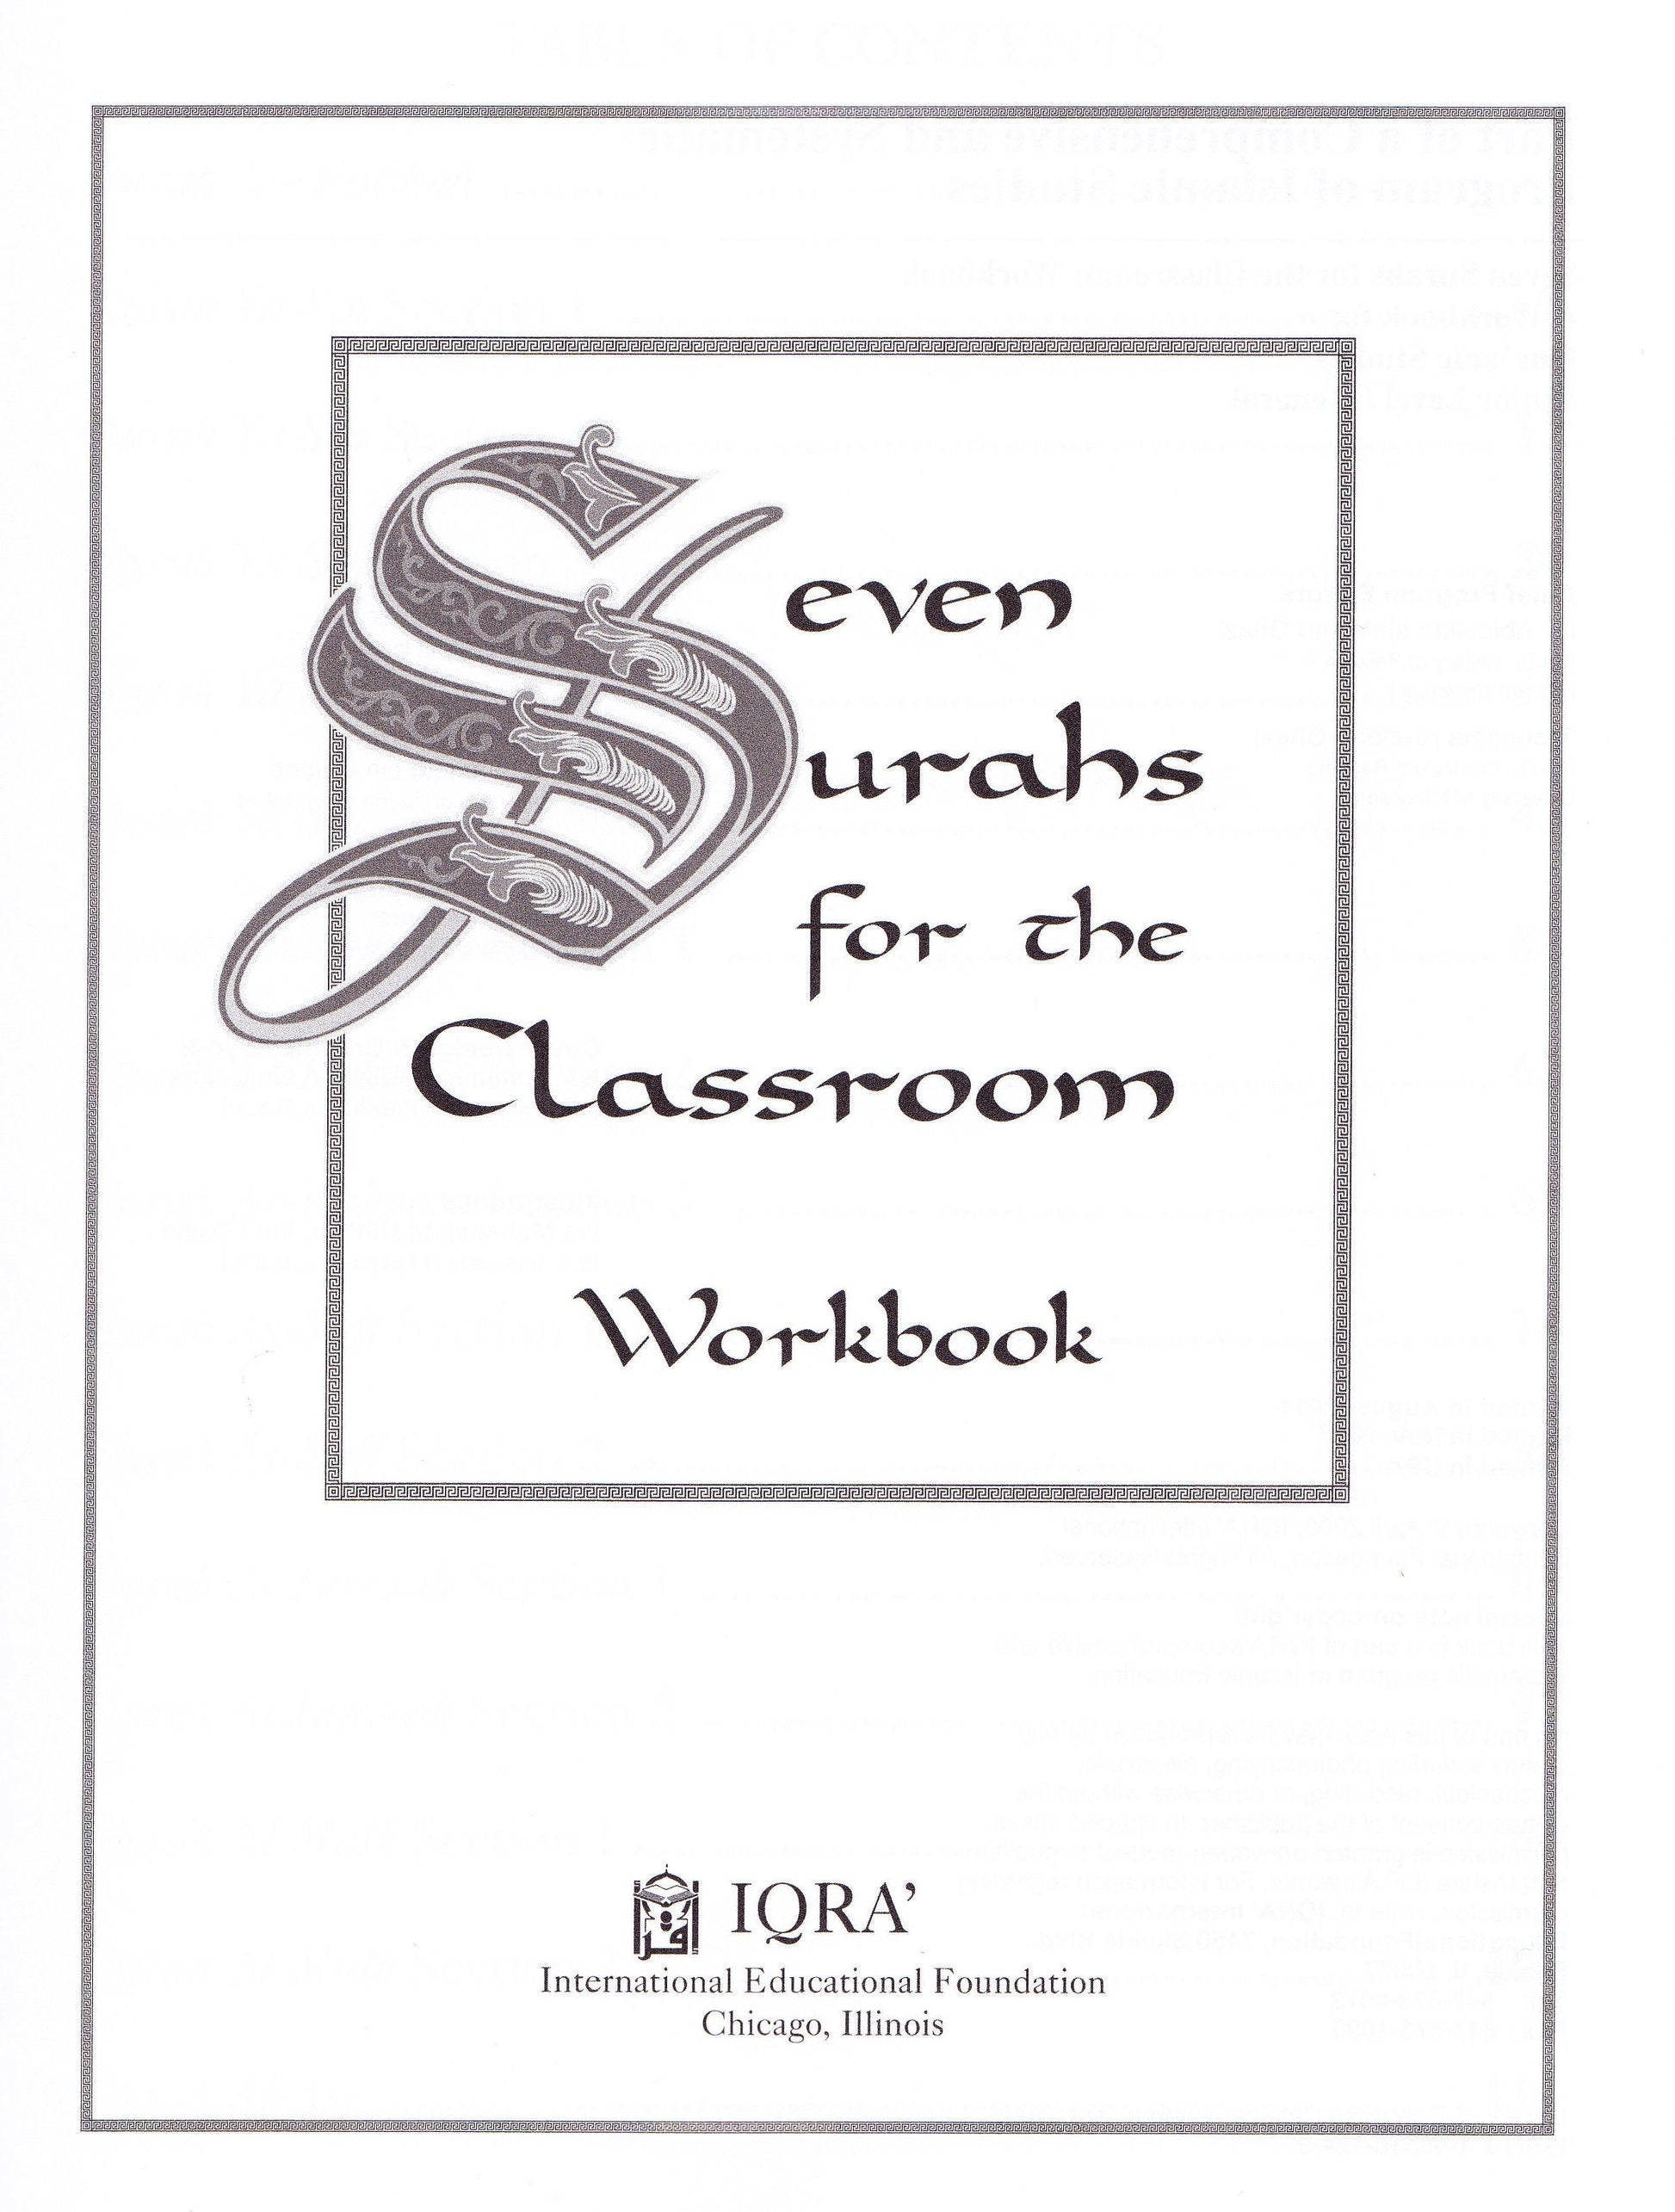 Seven Surahs Workbook - Premium Workbook from IQRA' international Educational Foundation - Just $8! Shop now at IQRA' international Educational Foundation